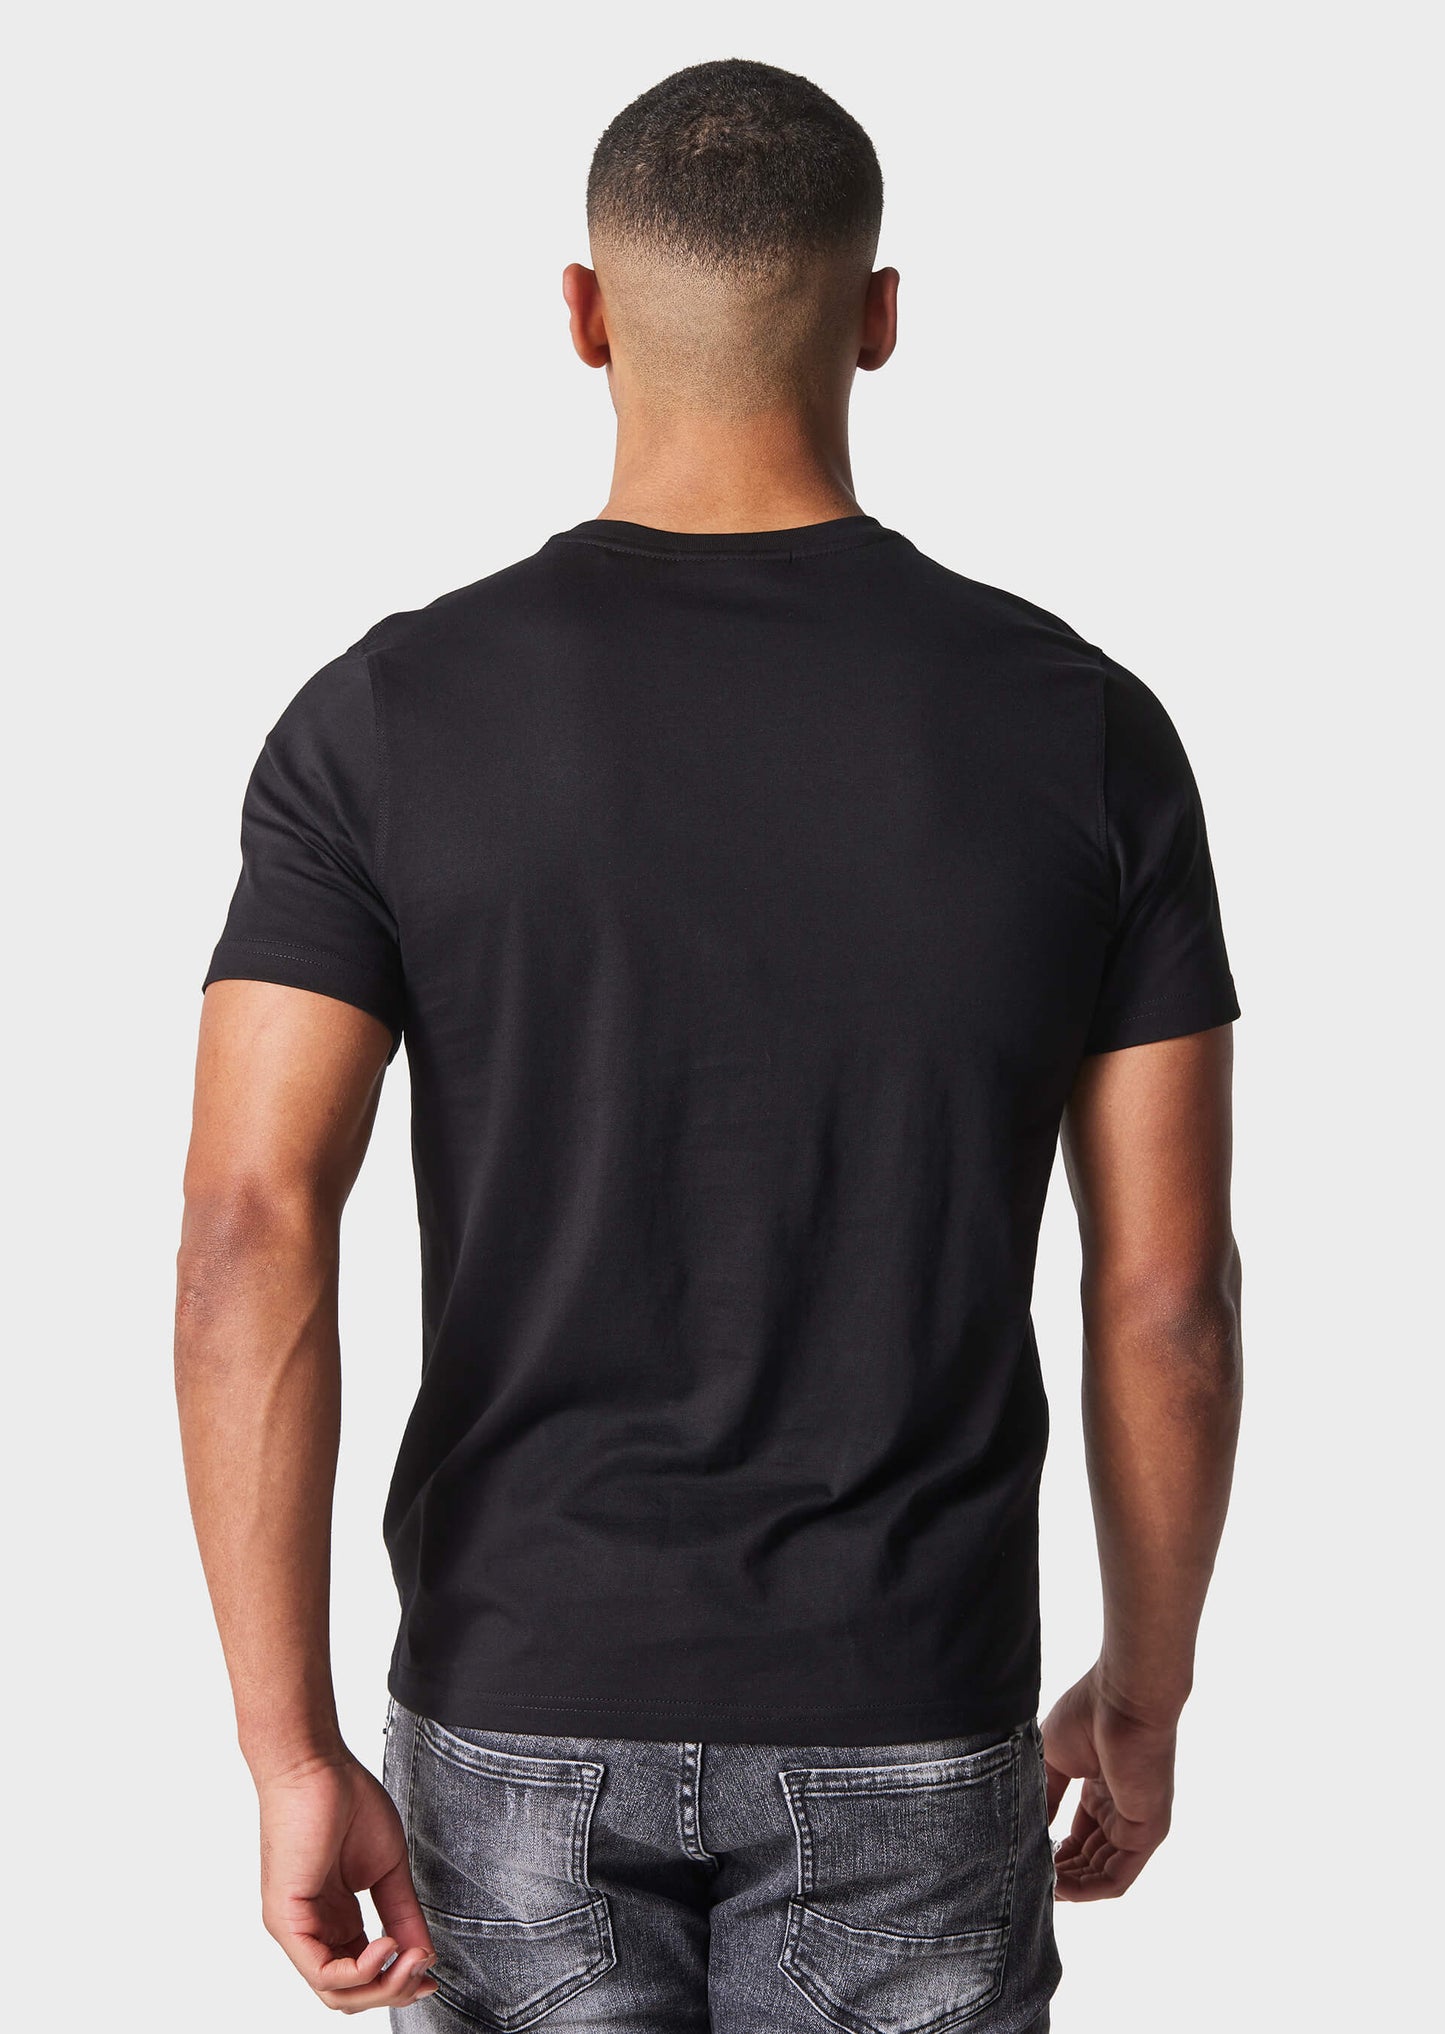 Foaks Black T-Shirt